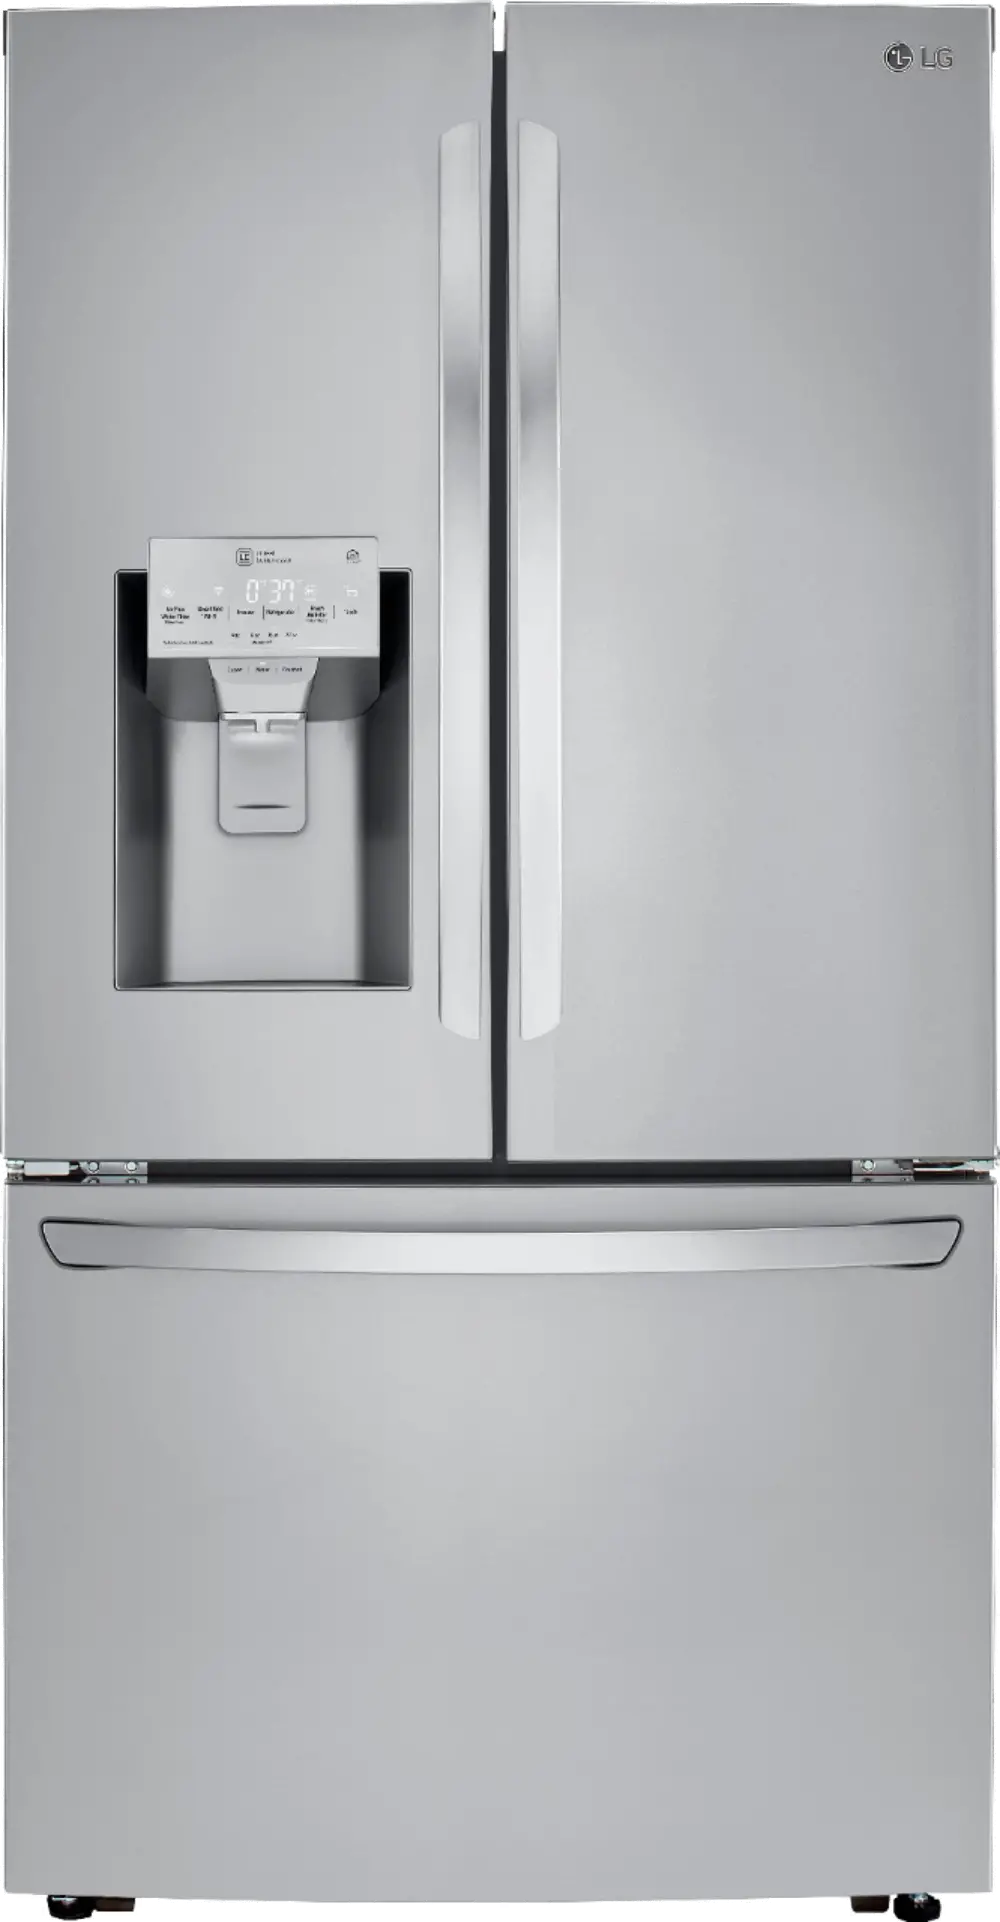 LRFXC2406S LG 23.5 cu ft French Door Refrigerator - Counter Depth Stainless Steel-1